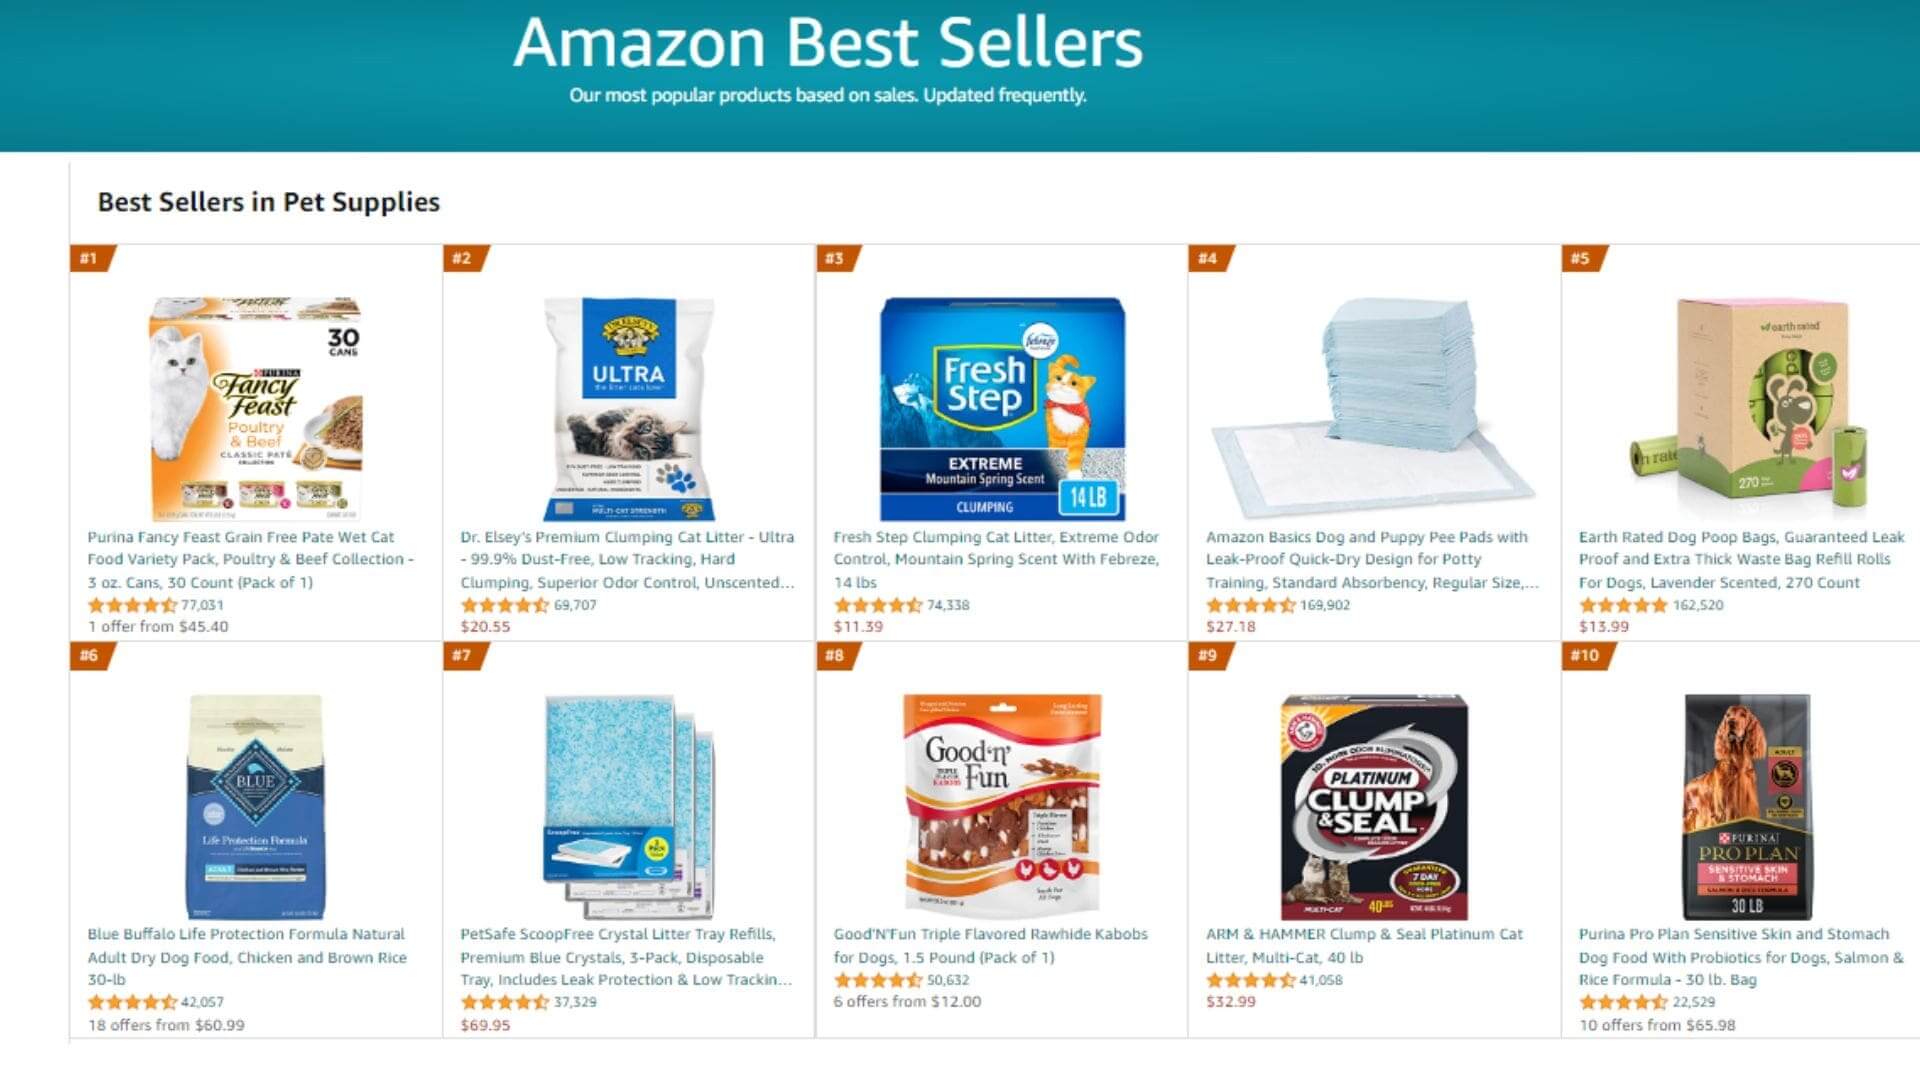 Amazon's most popular pet supplies